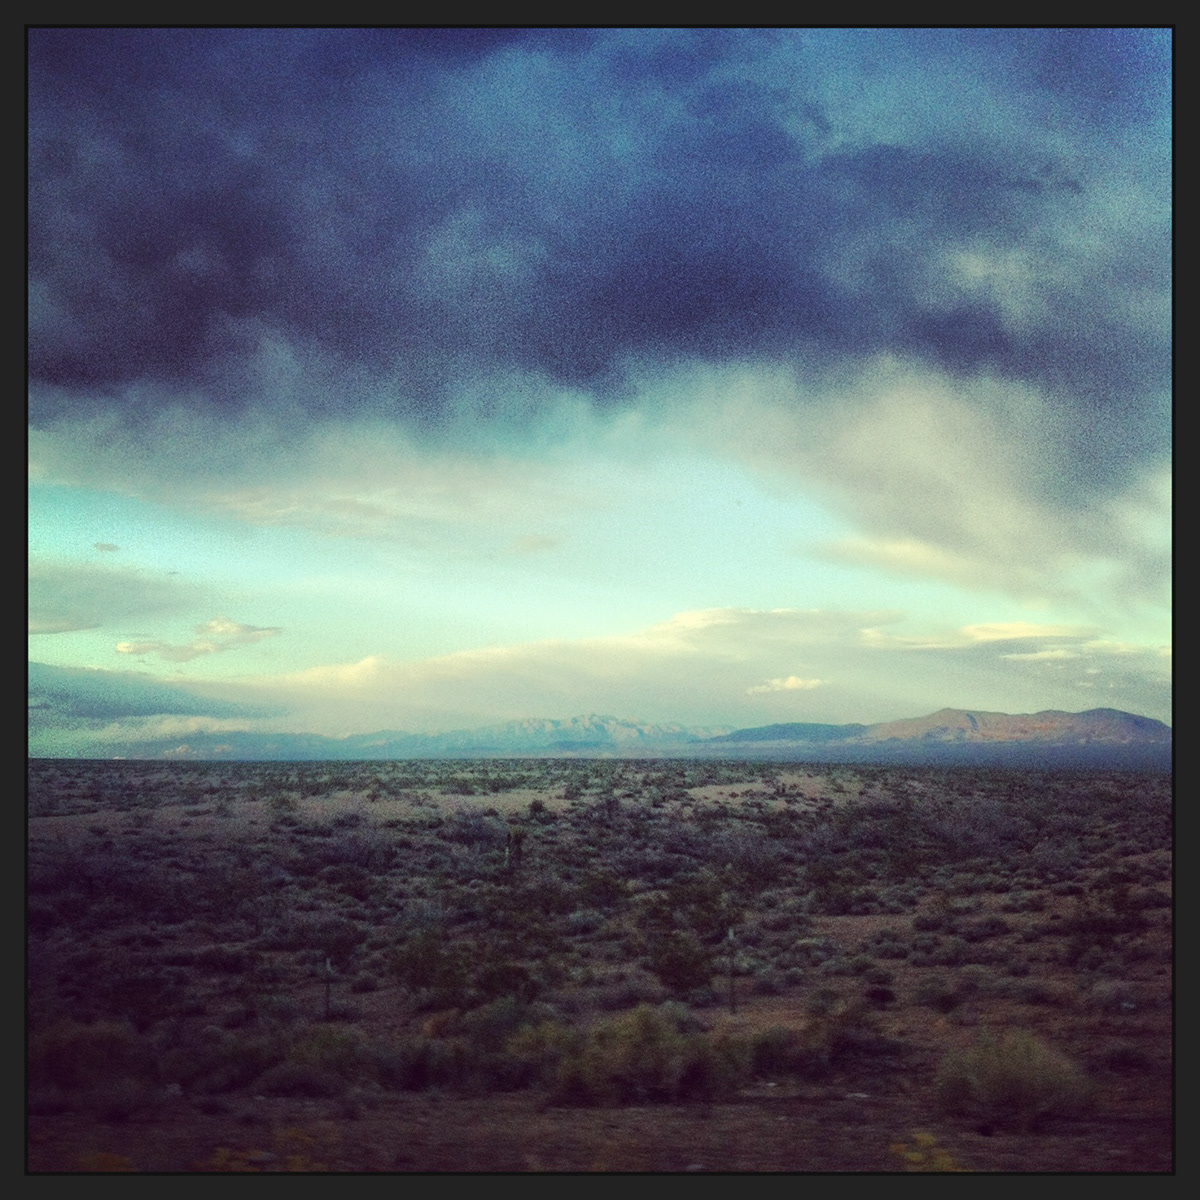 instagram iphone Travel usa Canada roadie road trip road trip Vegas Las Vegas California desert nevada arizona